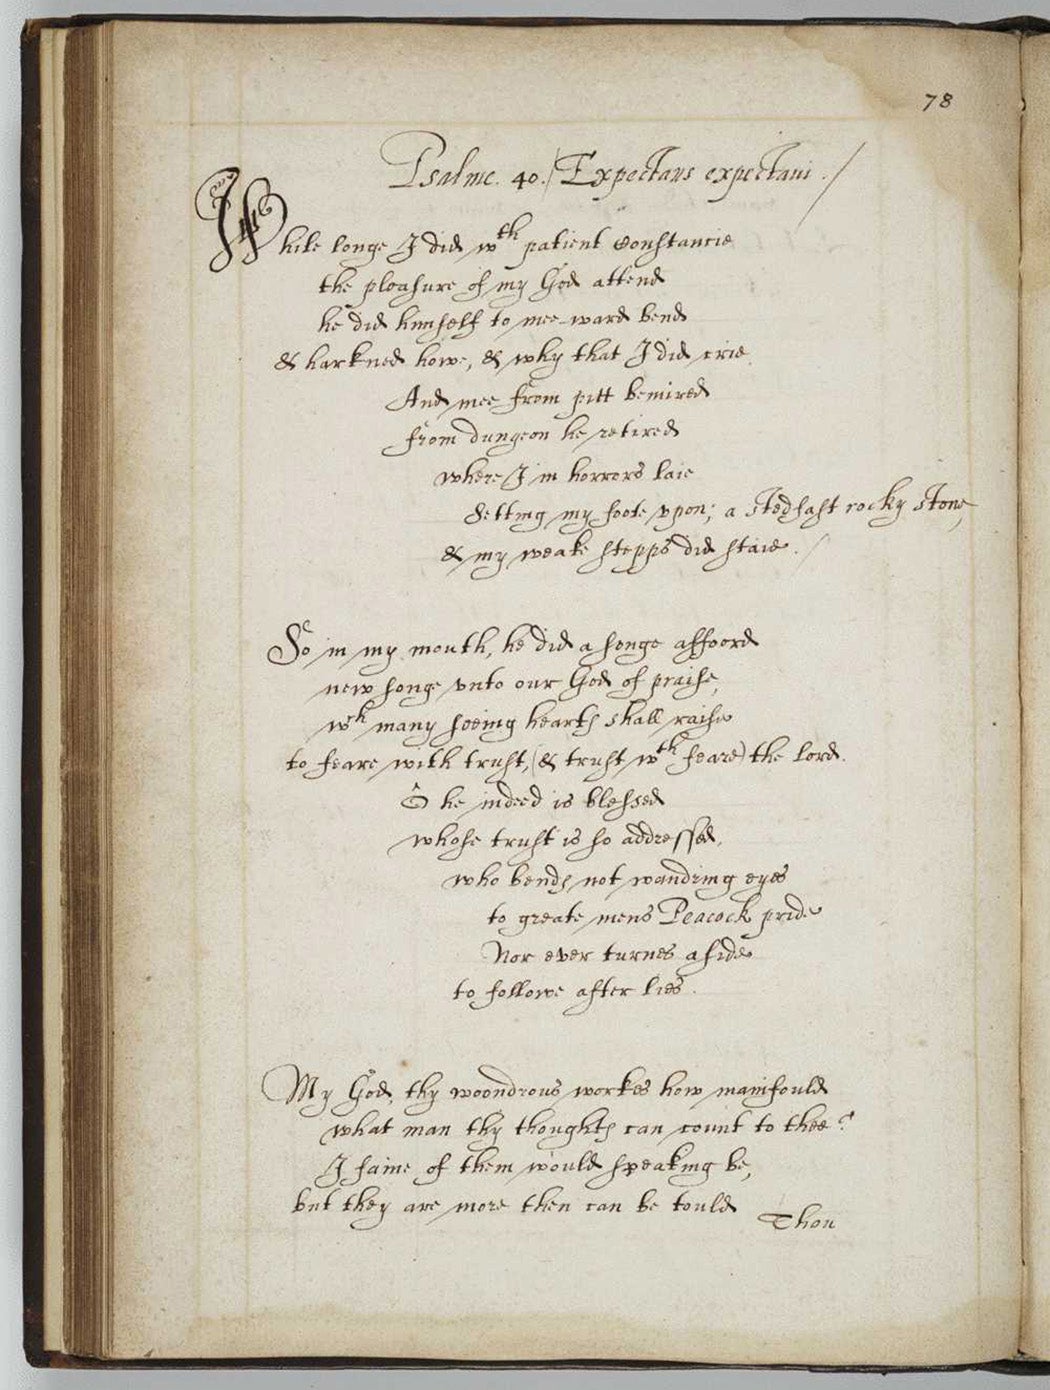 Psalm 40 manuscript from the Sidney Psalms